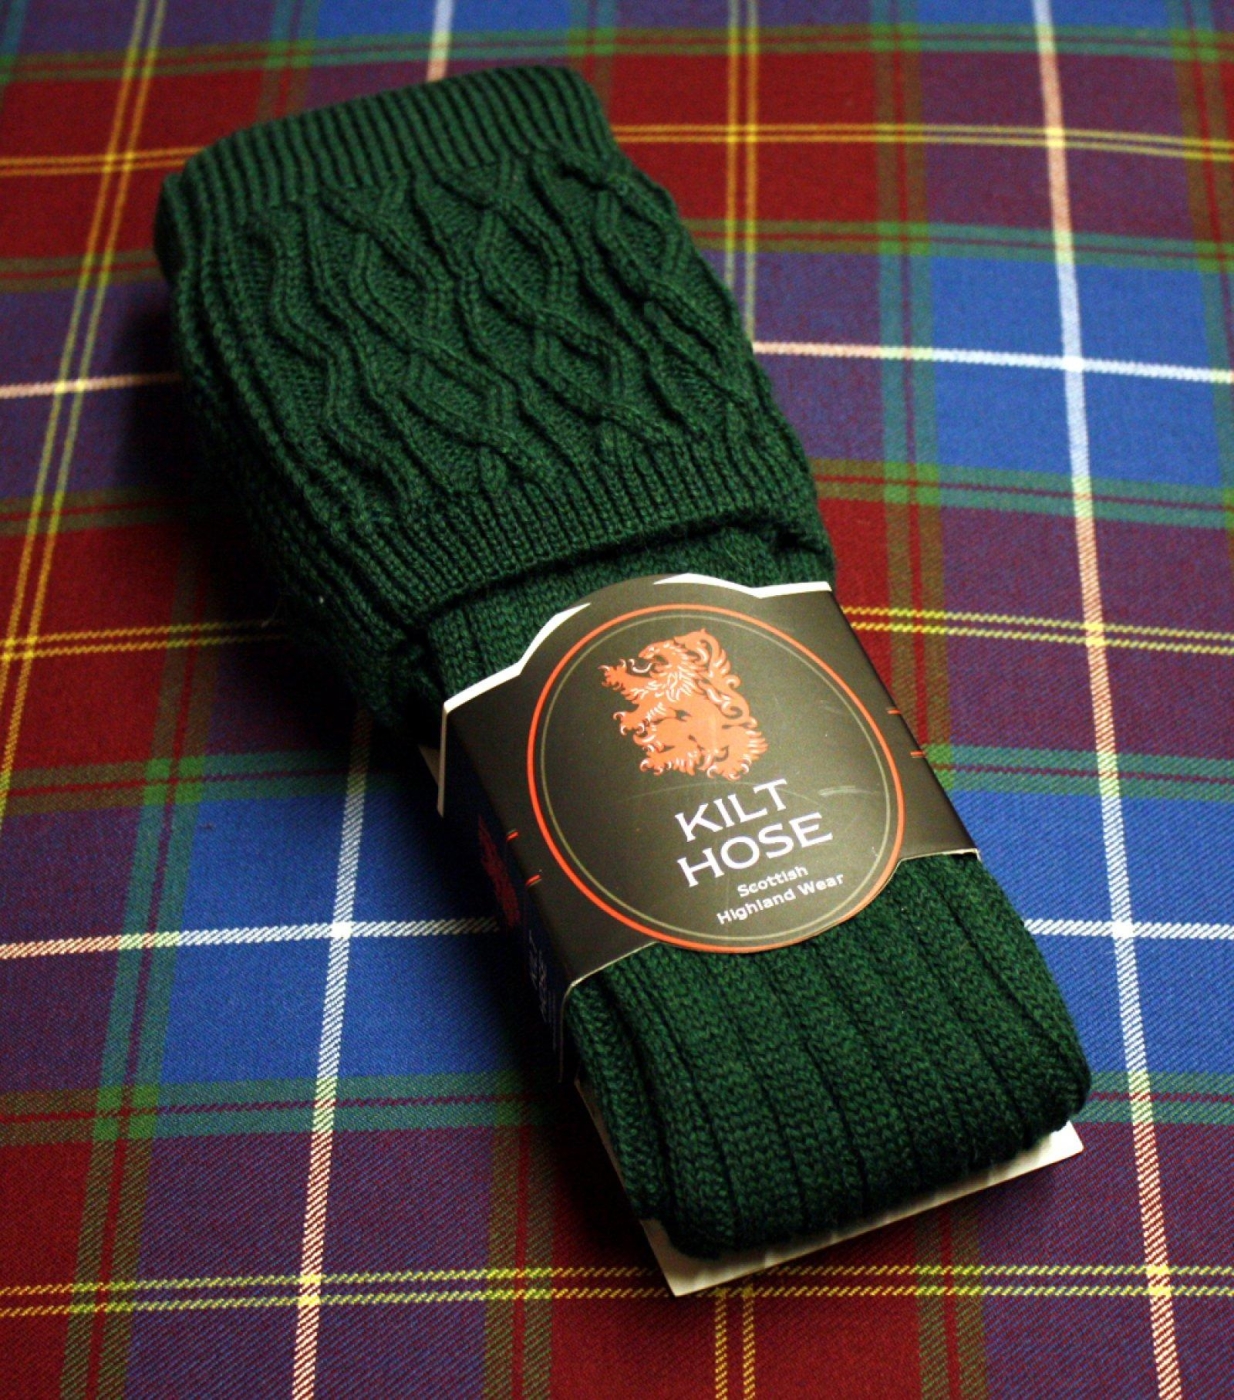 Highland Kilt Hose Sock Flashes Plain Green Color Green Kilt Hose Socks Flashes 